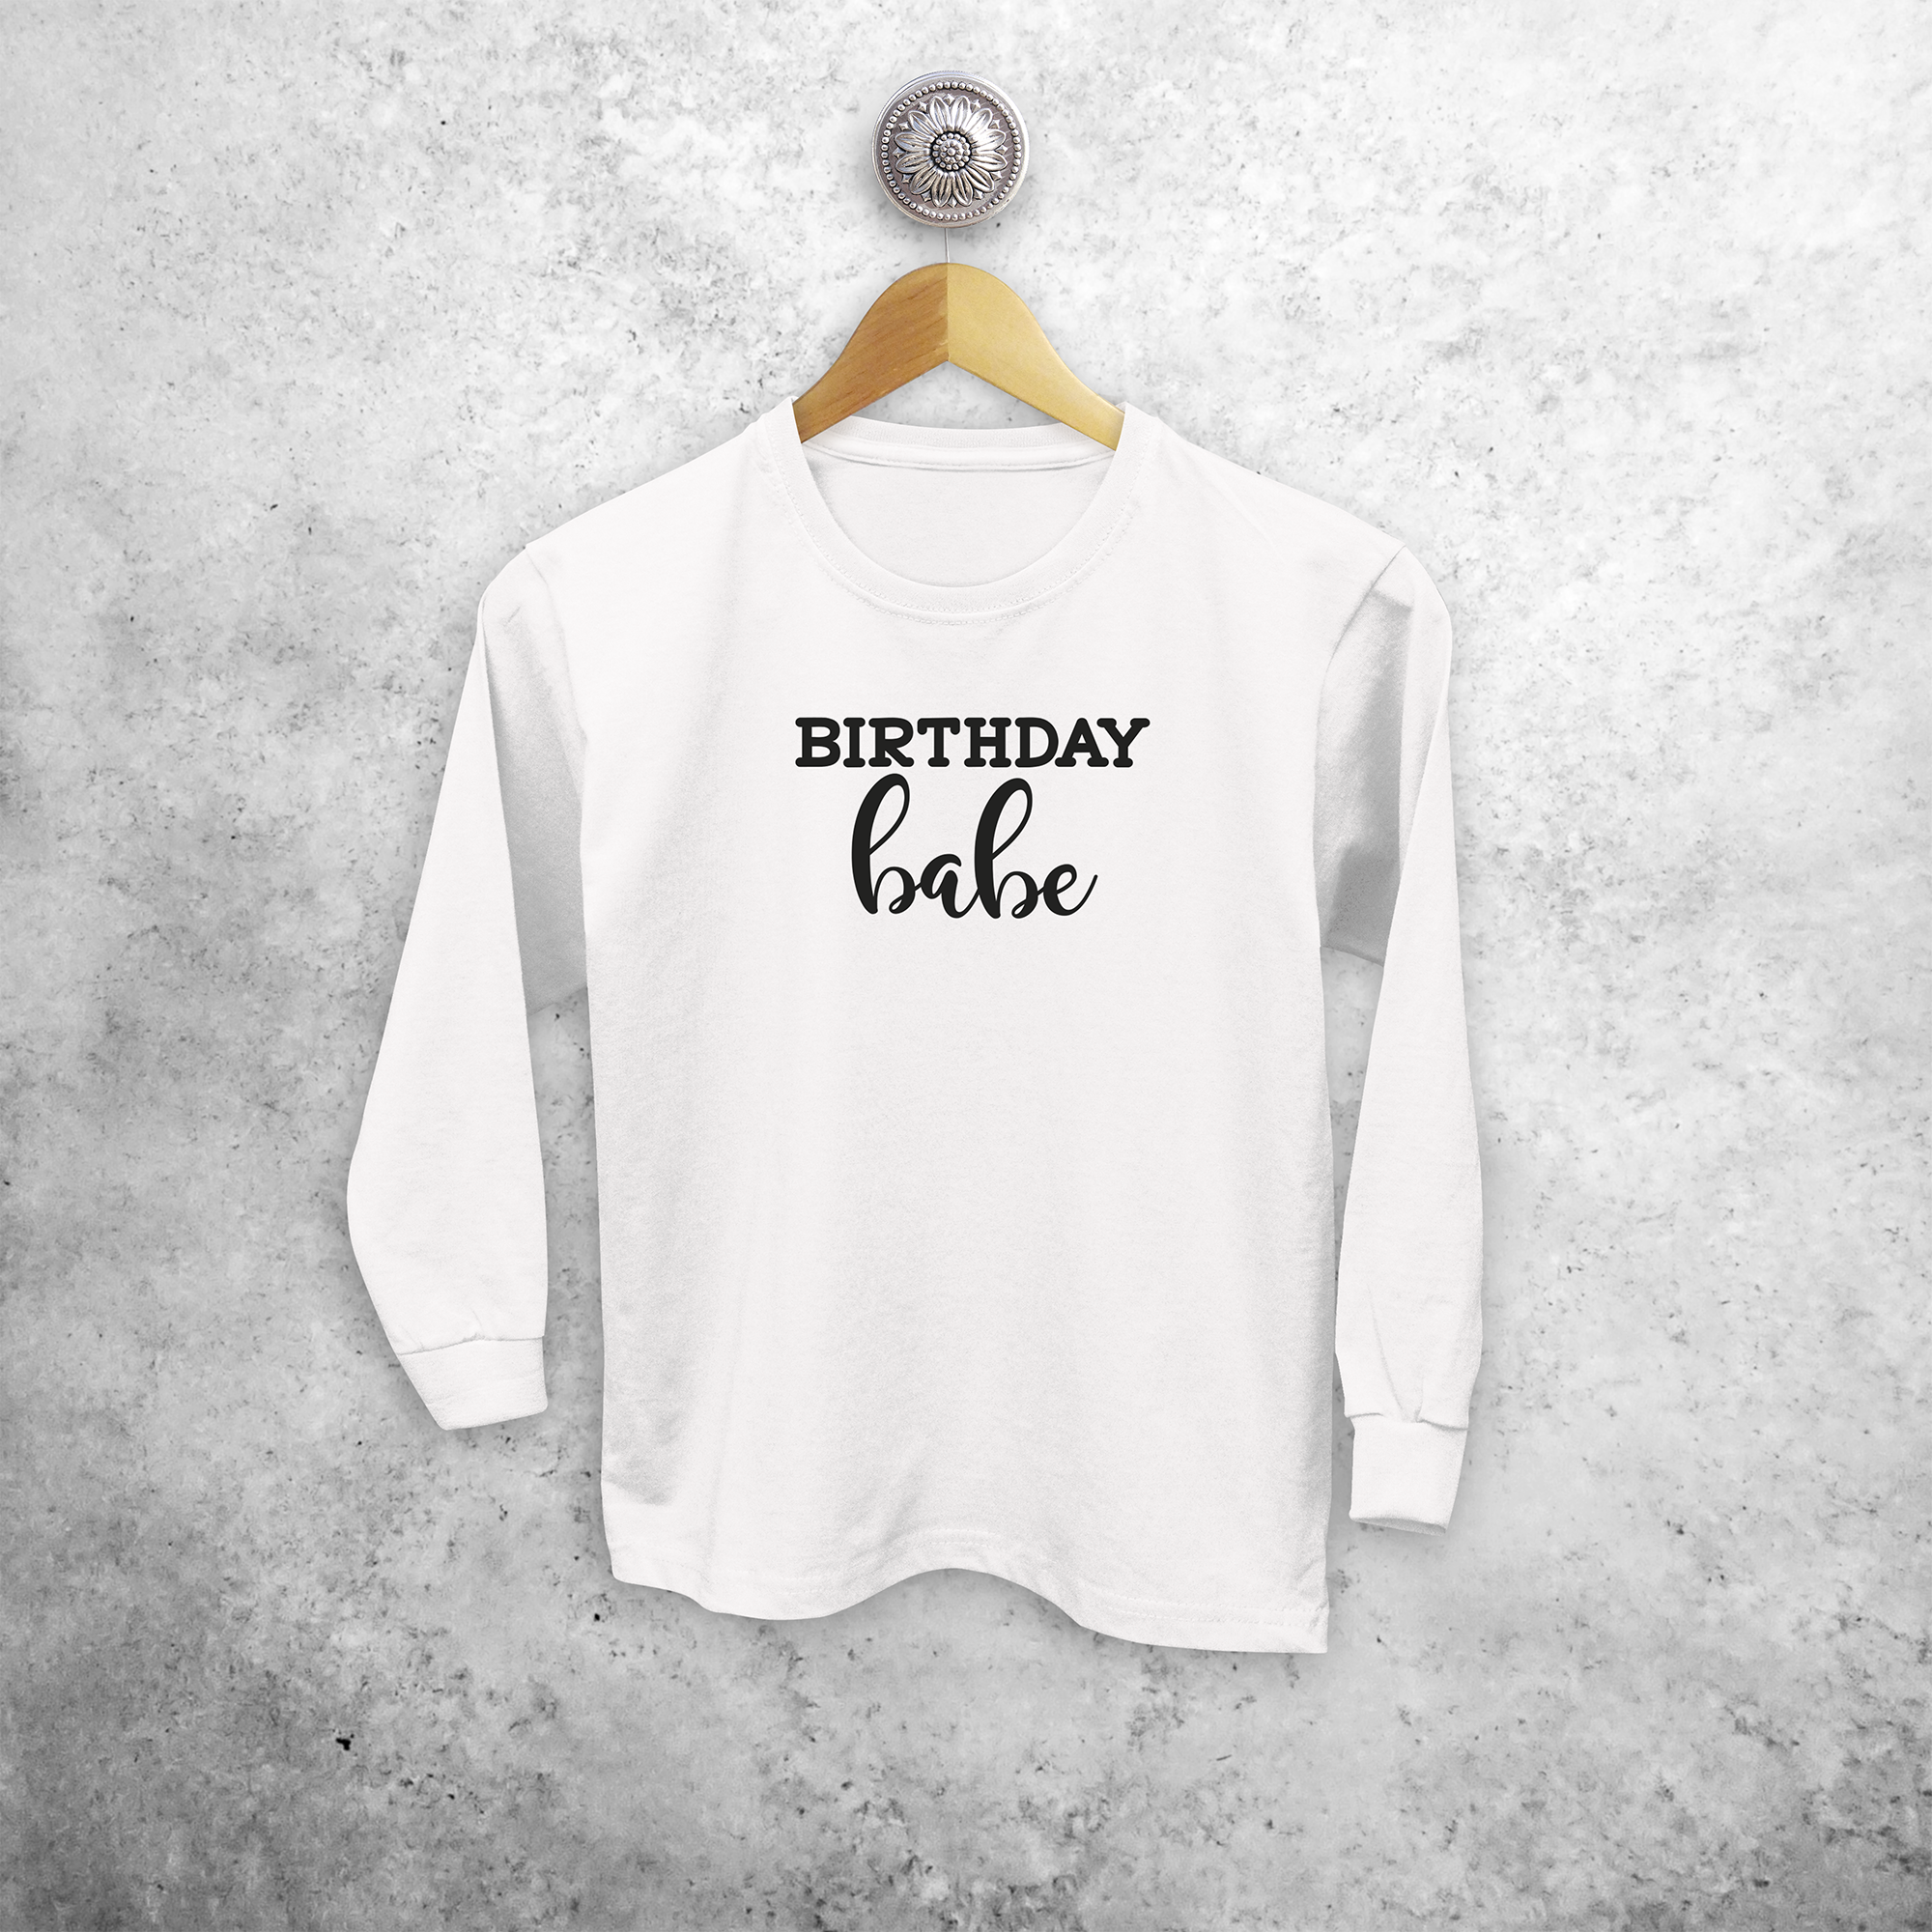 'Birthday babe' kids longsleeve shirt